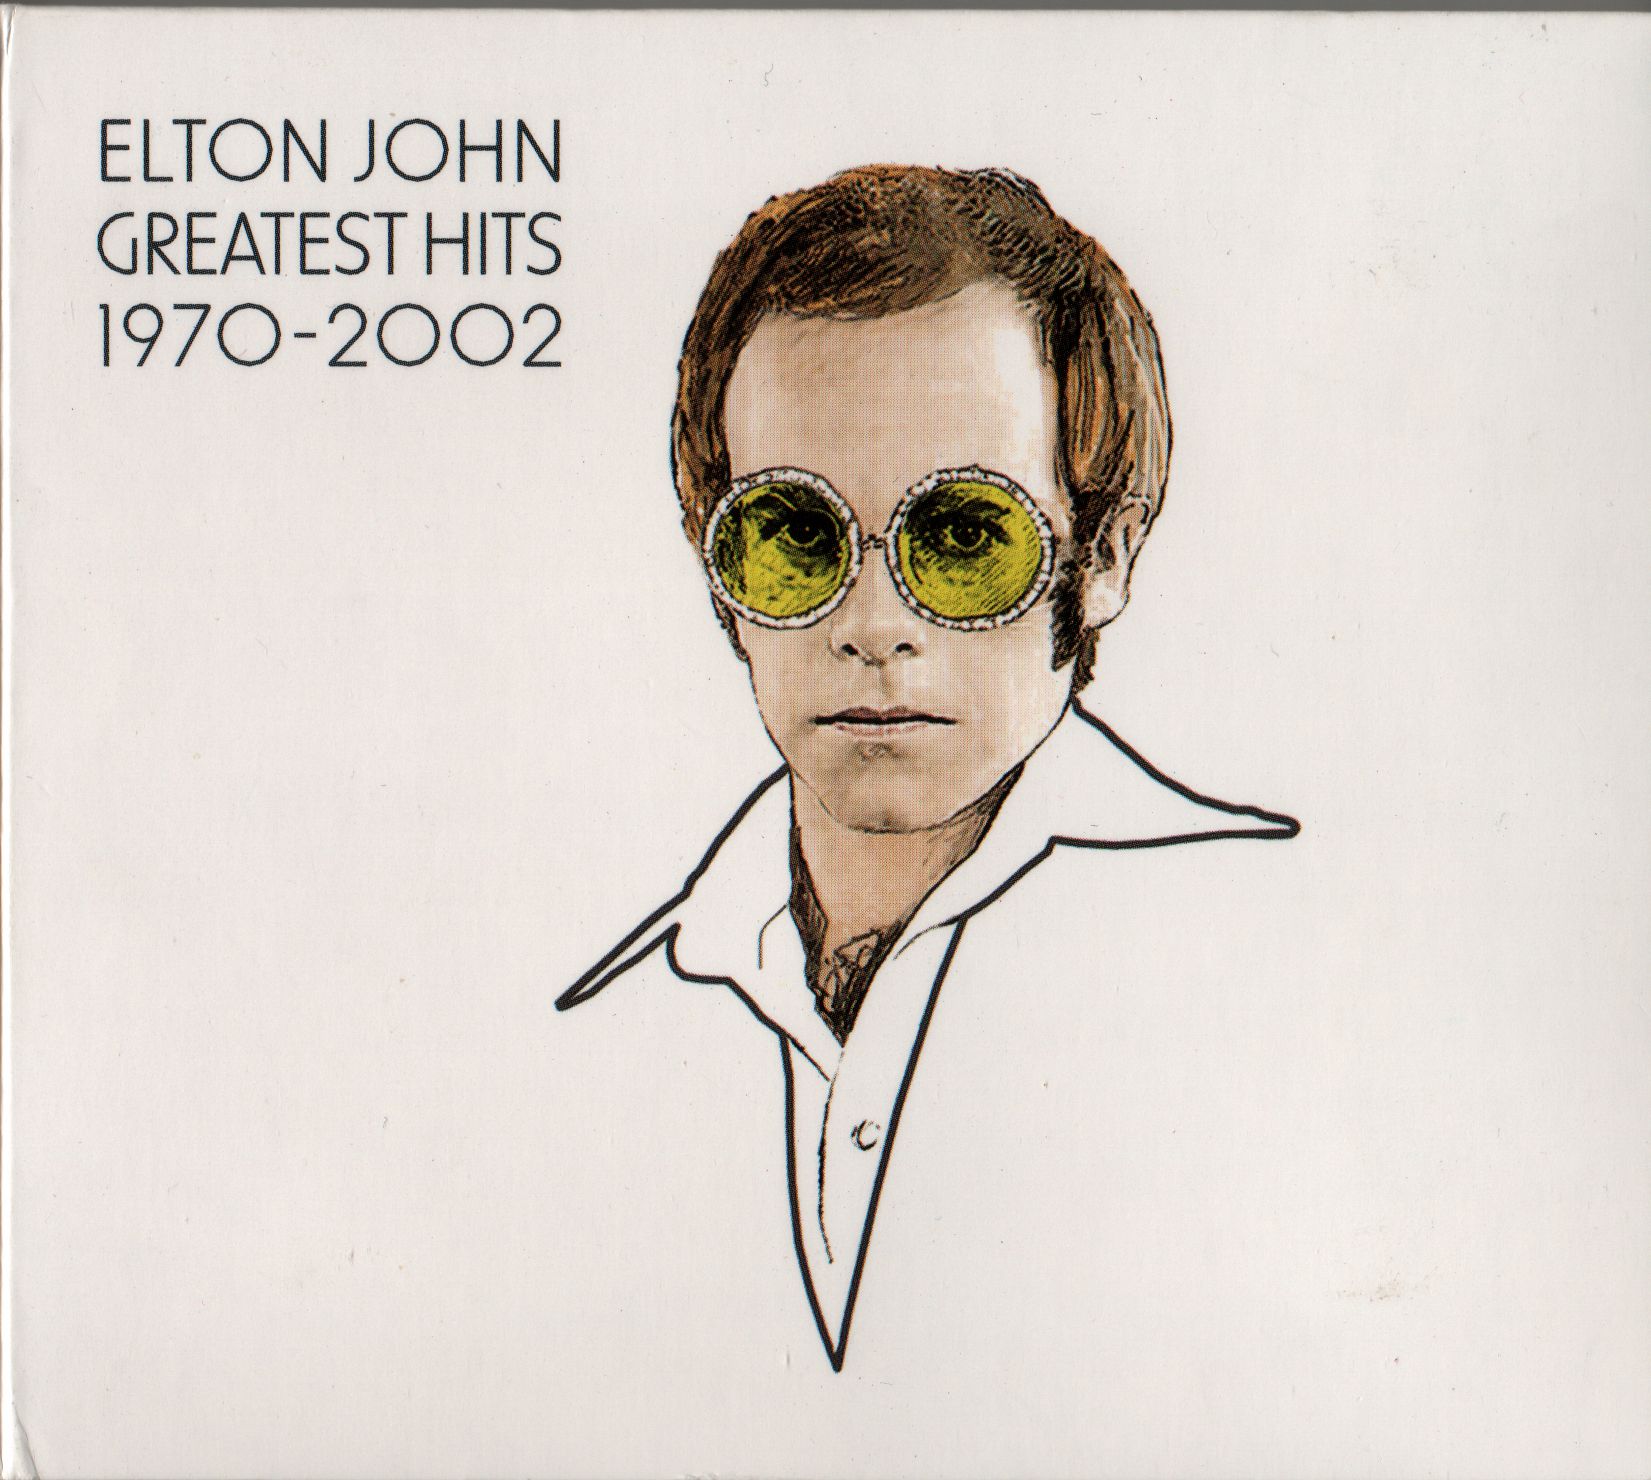 Release “Greatest Hits 1970–2002” by Elton John - Cover Art - MusicBrainz